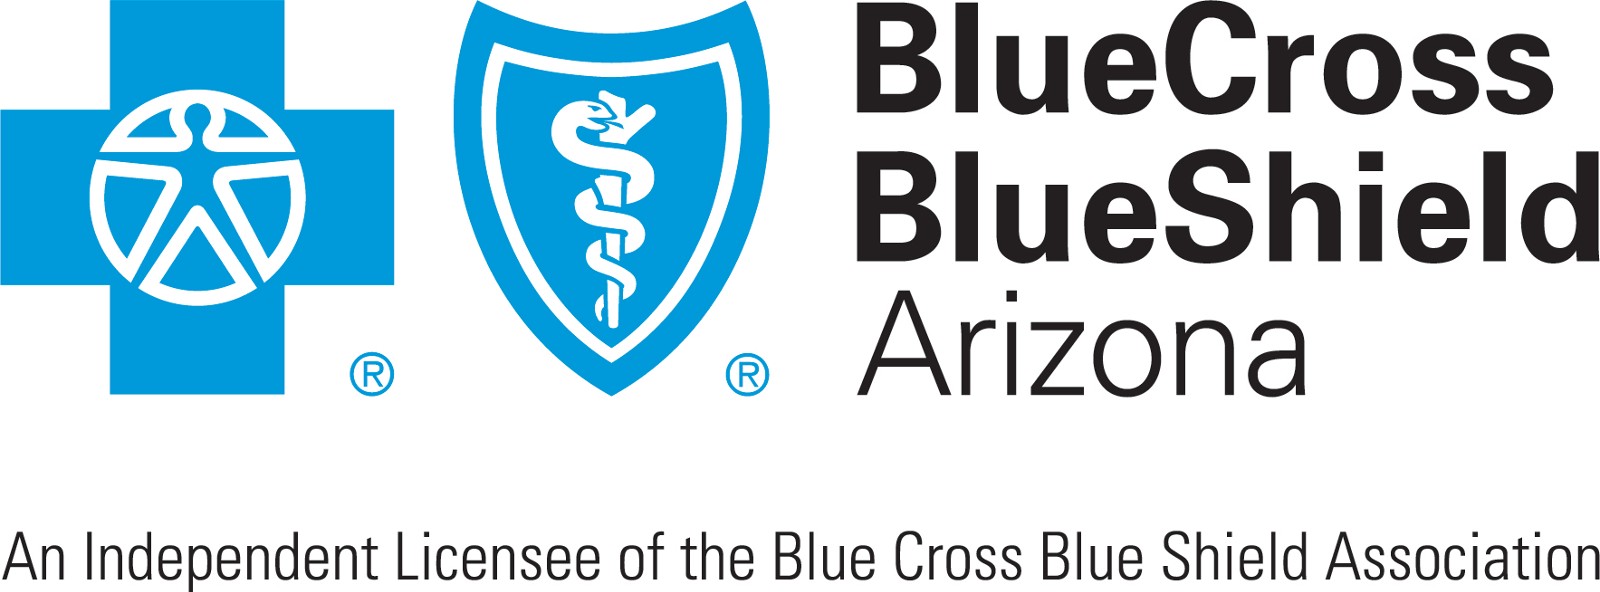 BlueCross BlueShield Arizona